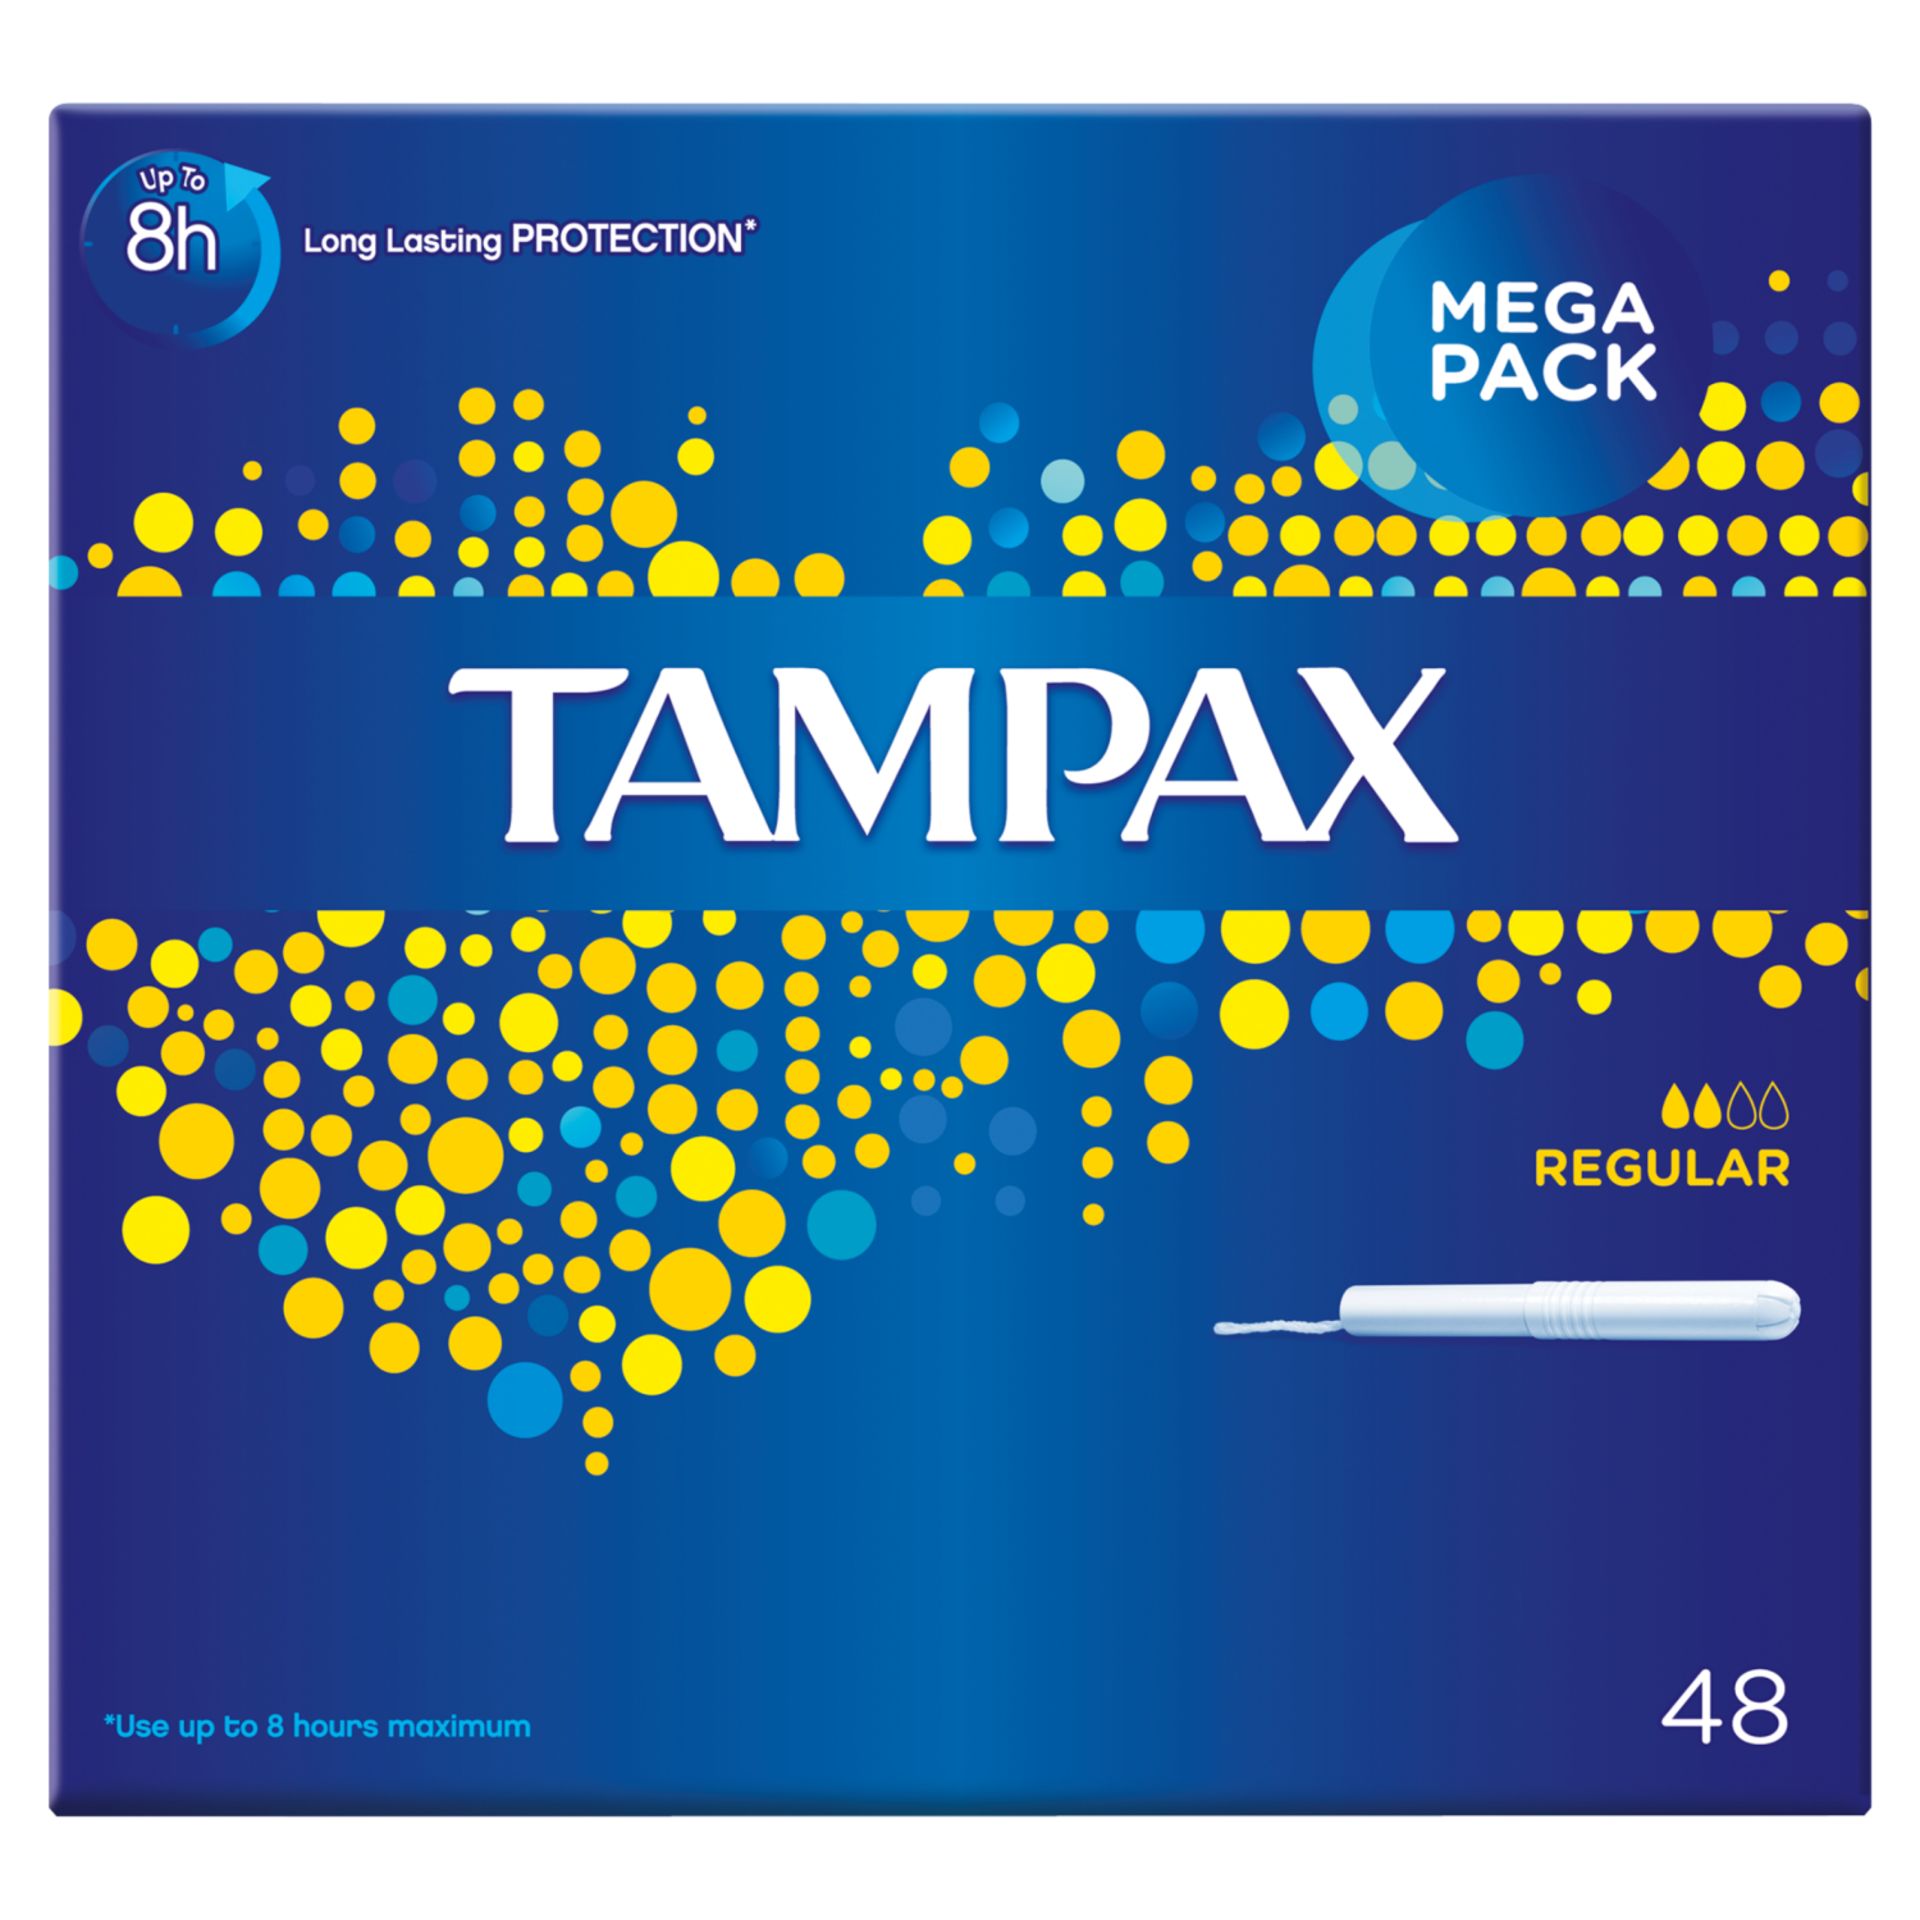 V Brand New A Lot Of Four Mega Packs 48 Tampax Tampons-Regular ISP £5.42 Each (Clearchemist) X 2